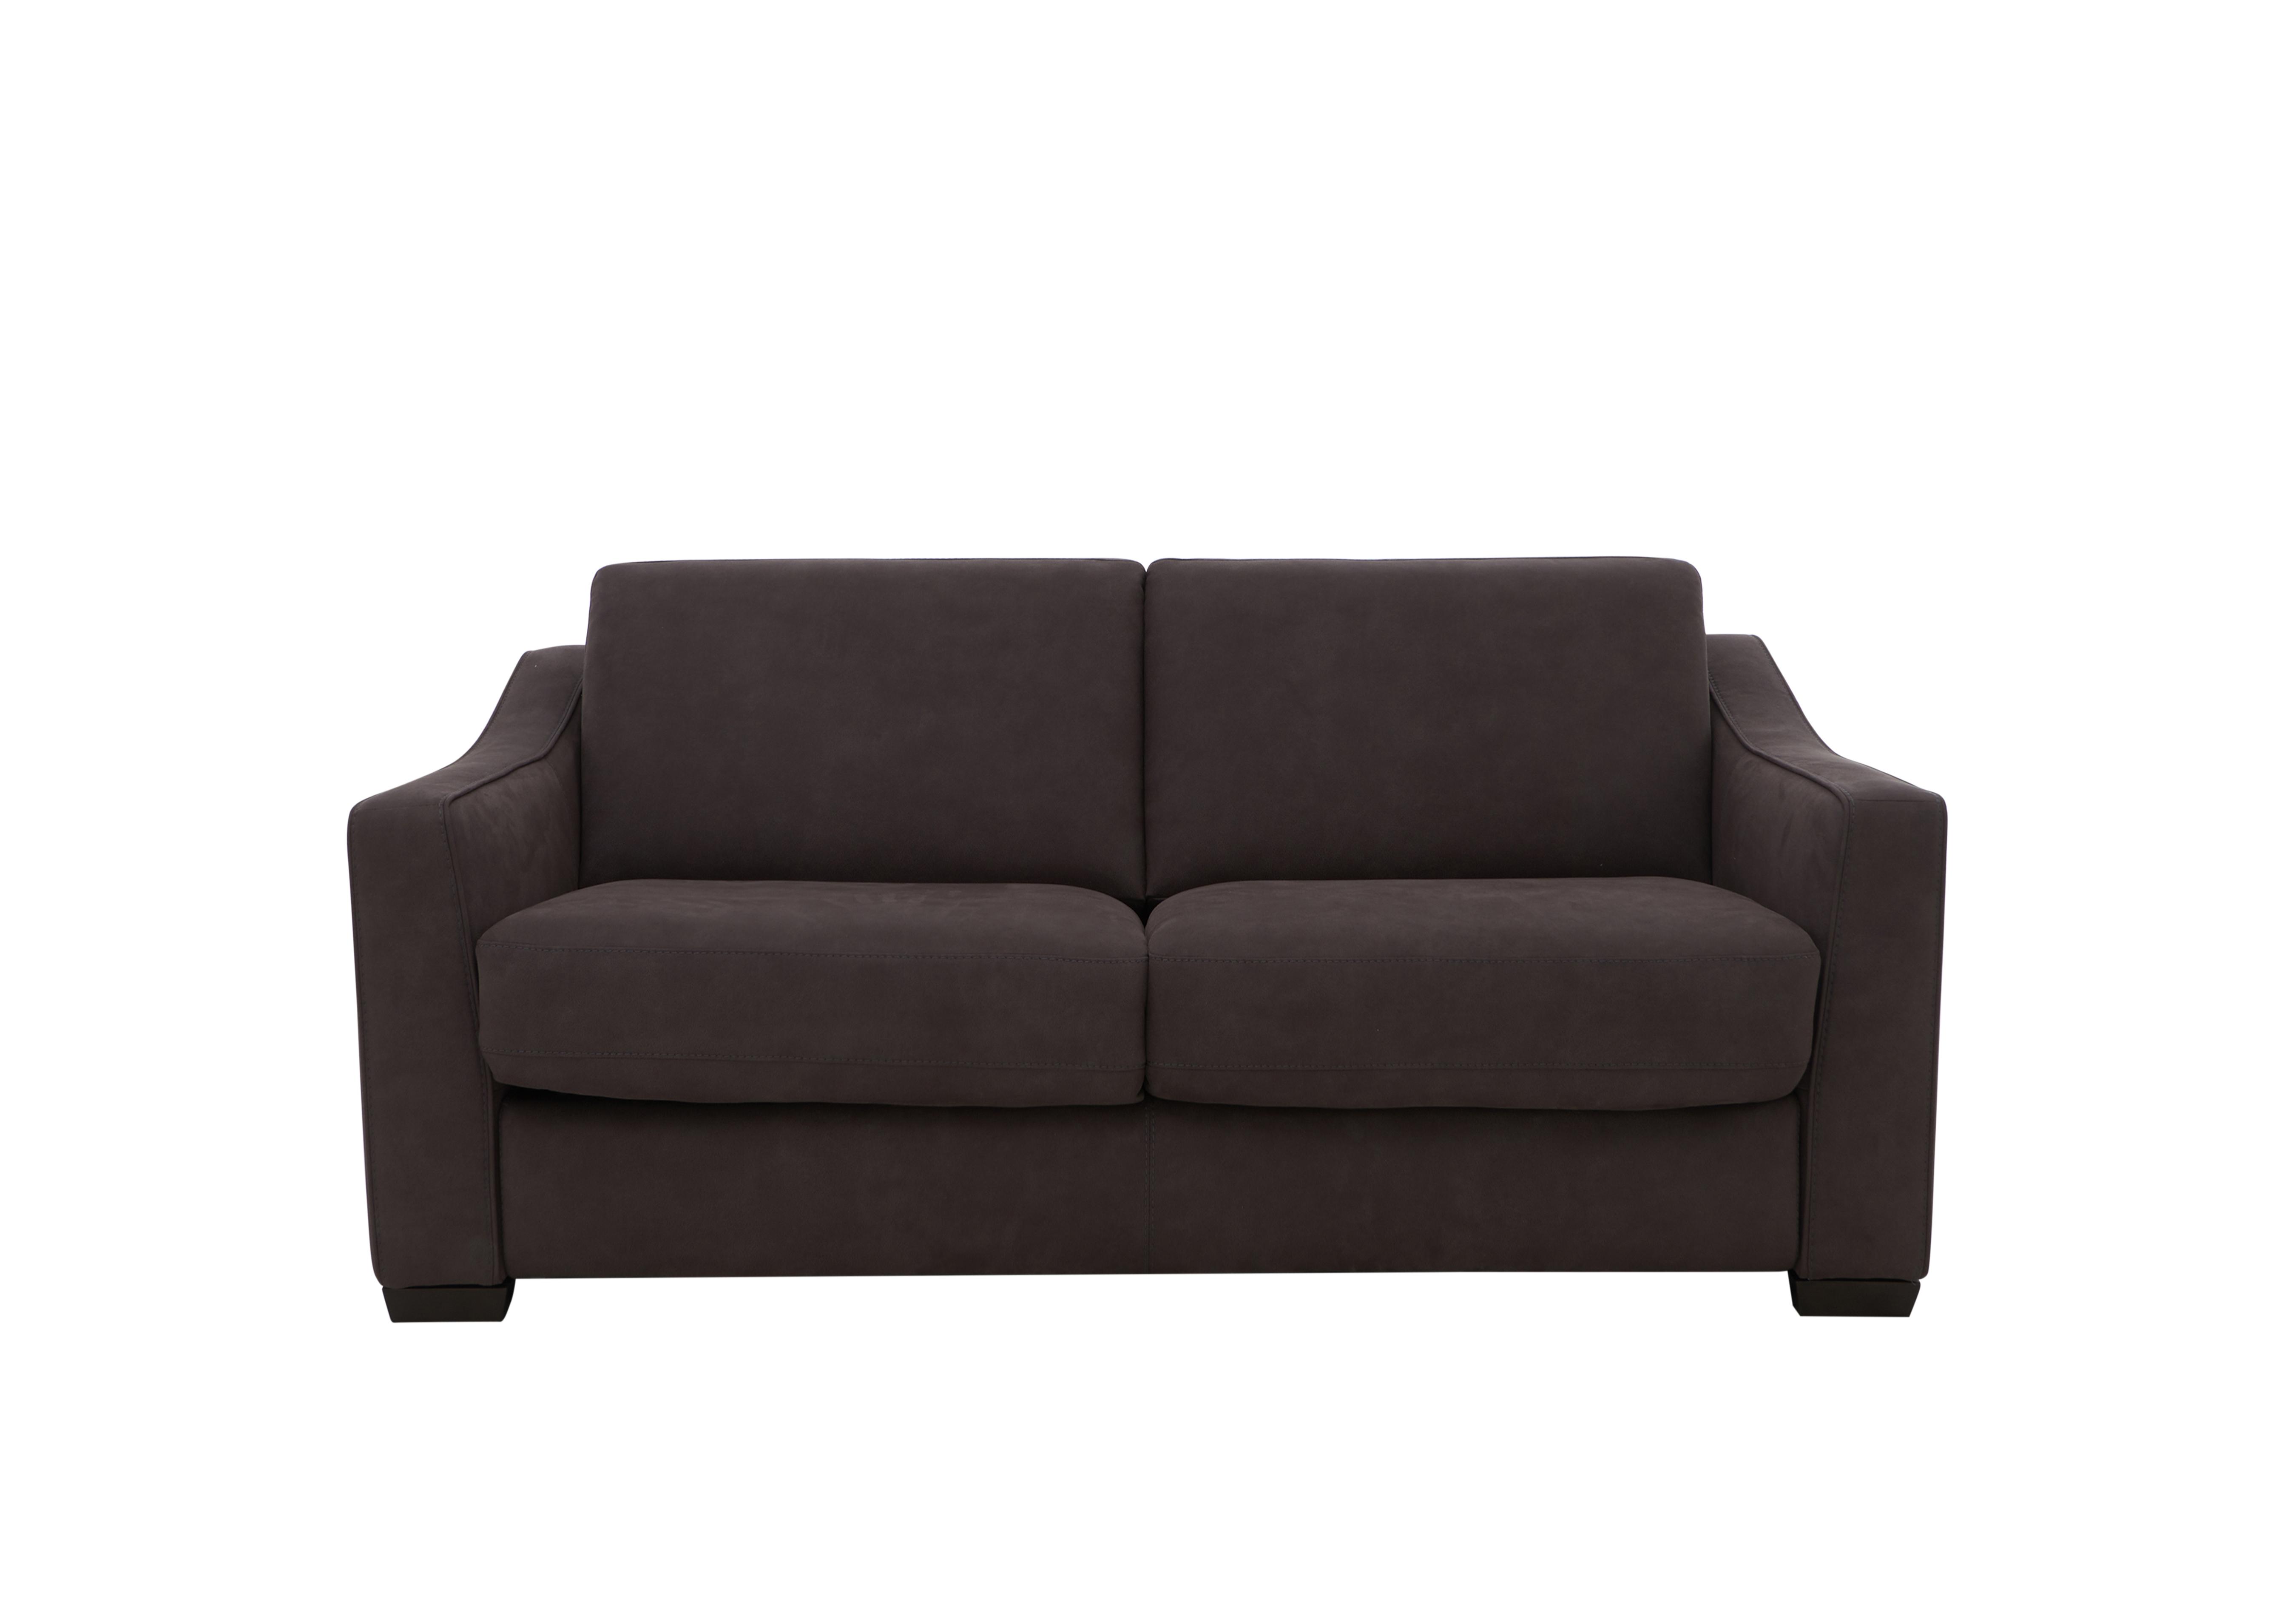 Optimus 2 Seater Fabric Sofa in Bfa-Blj-R16 Grey on Furniture Village